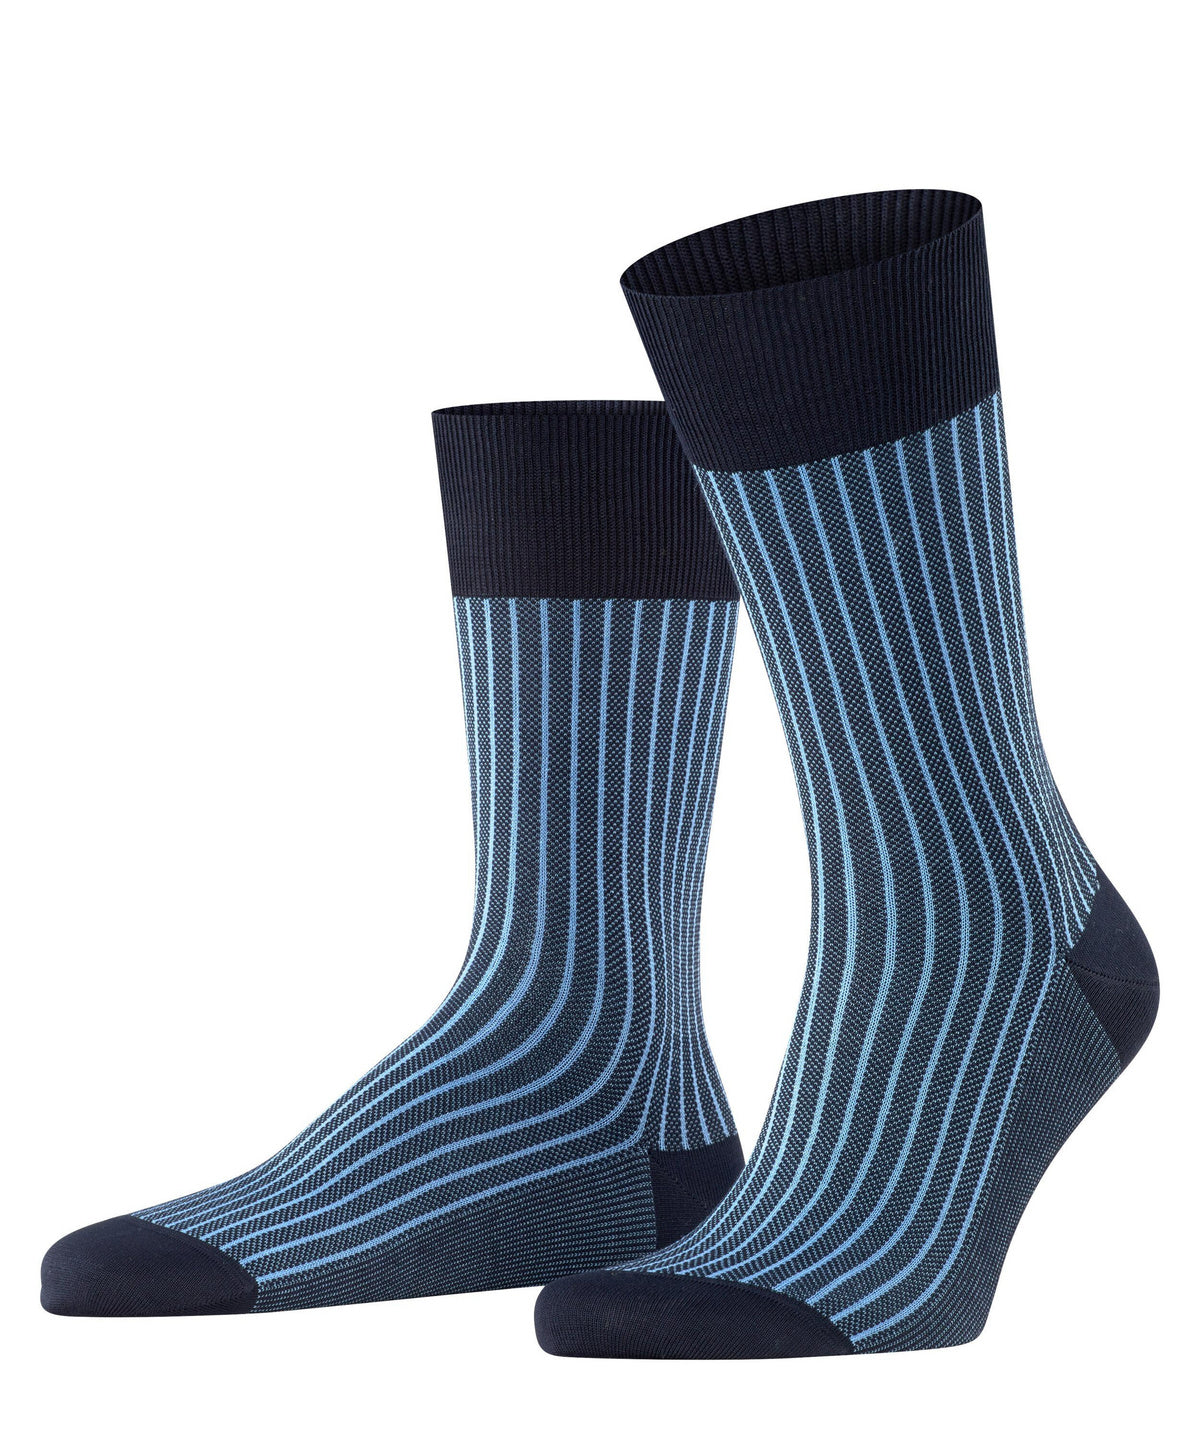 Falke dark navy light blue striped socks